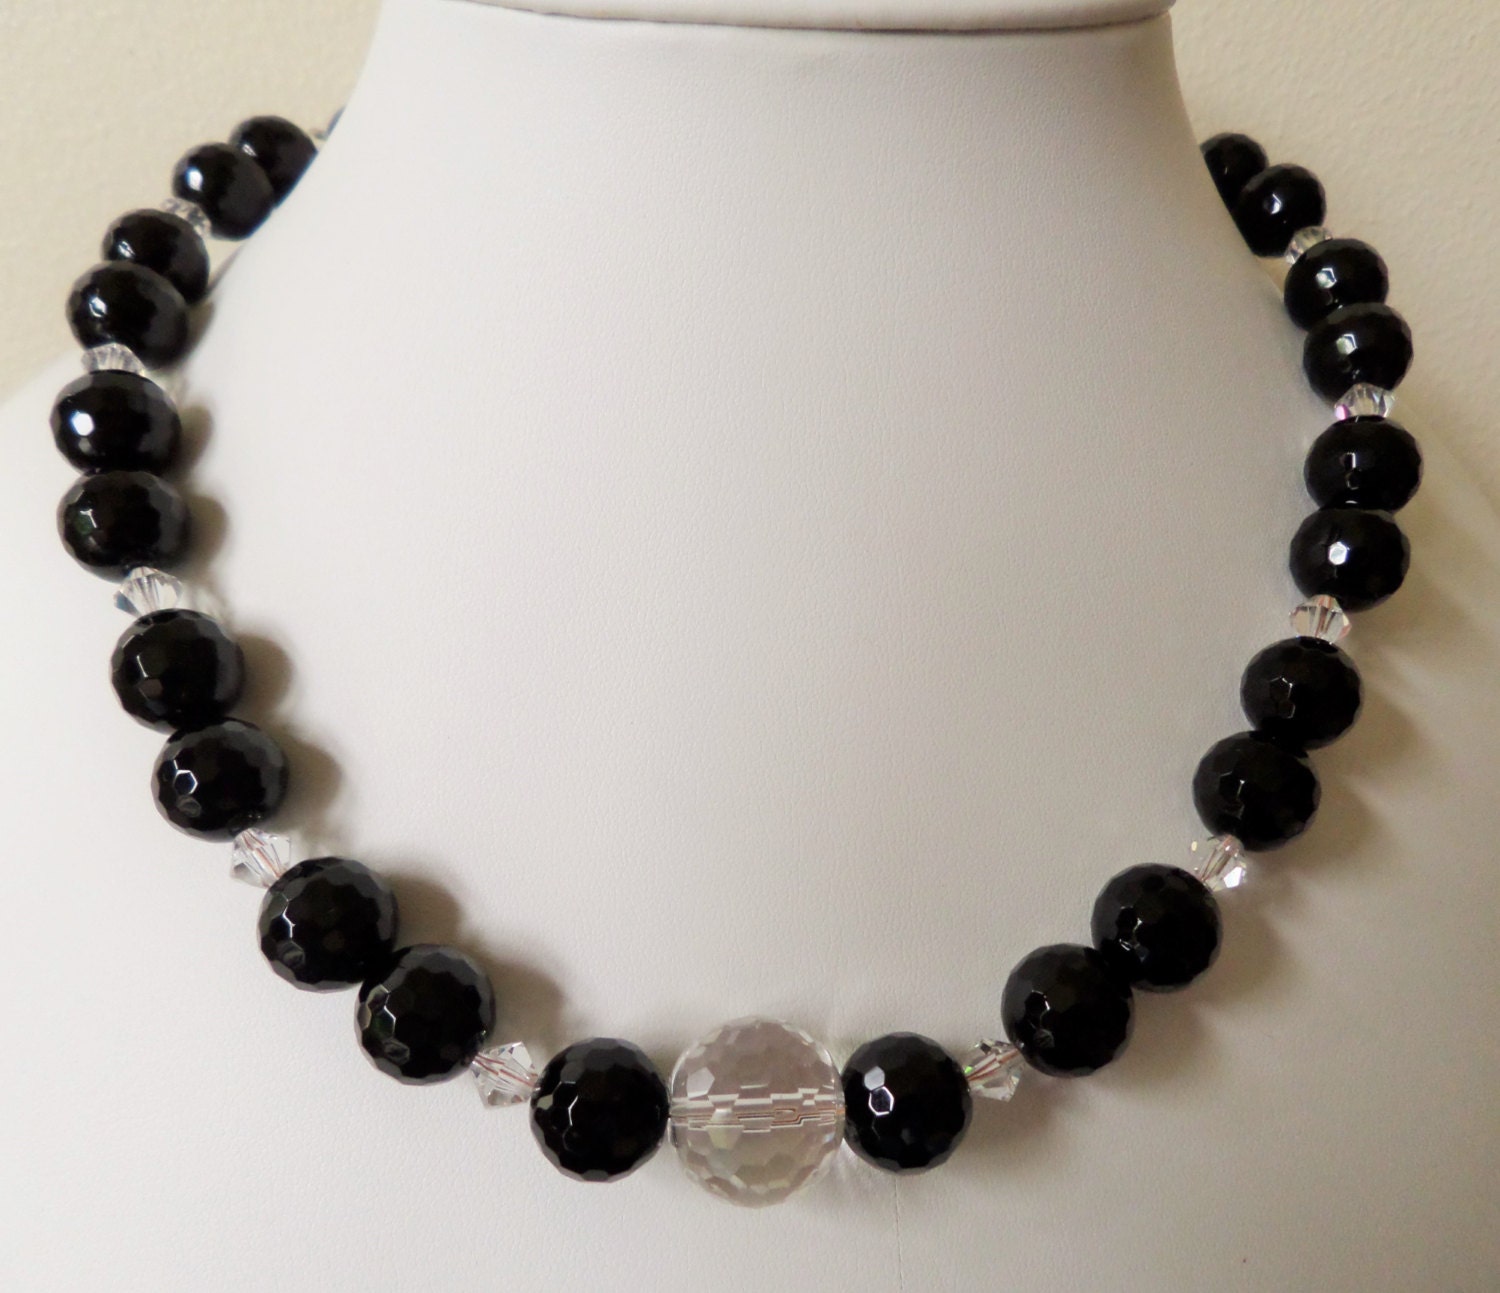 Black onyx necklace by CoastalMoonJewellery on Etsy